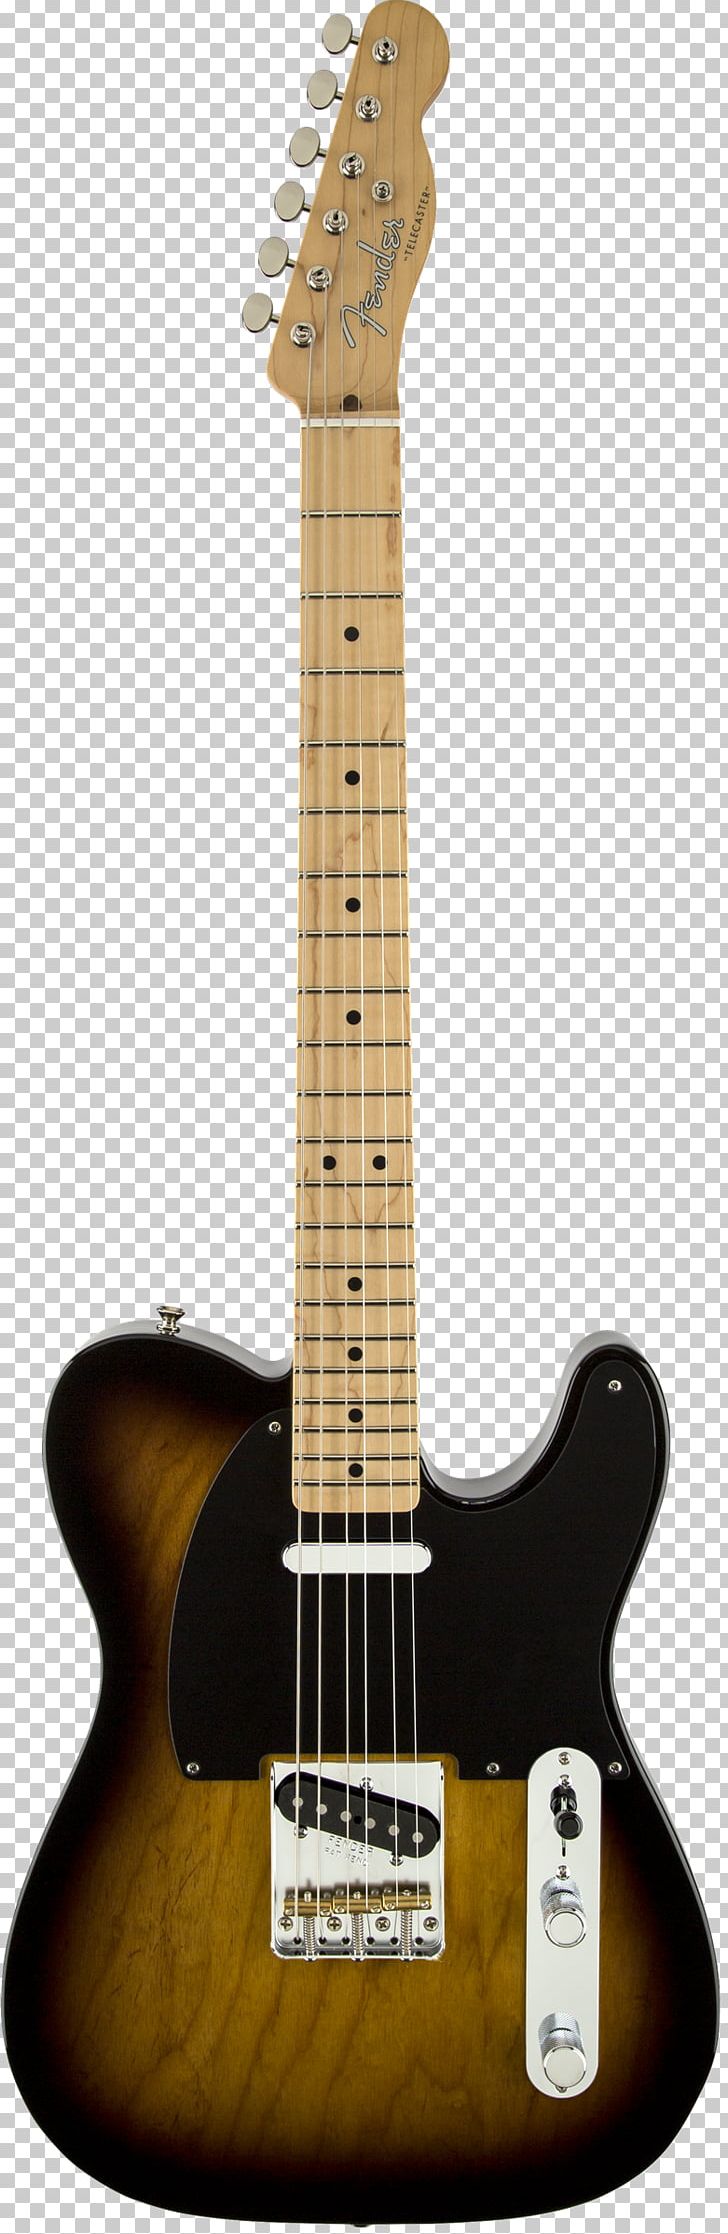 Fender Telecaster Plus Fender Stratocaster Fender Musical Instruments Corporation Guitar PNG, Clipart,  Free PNG Download